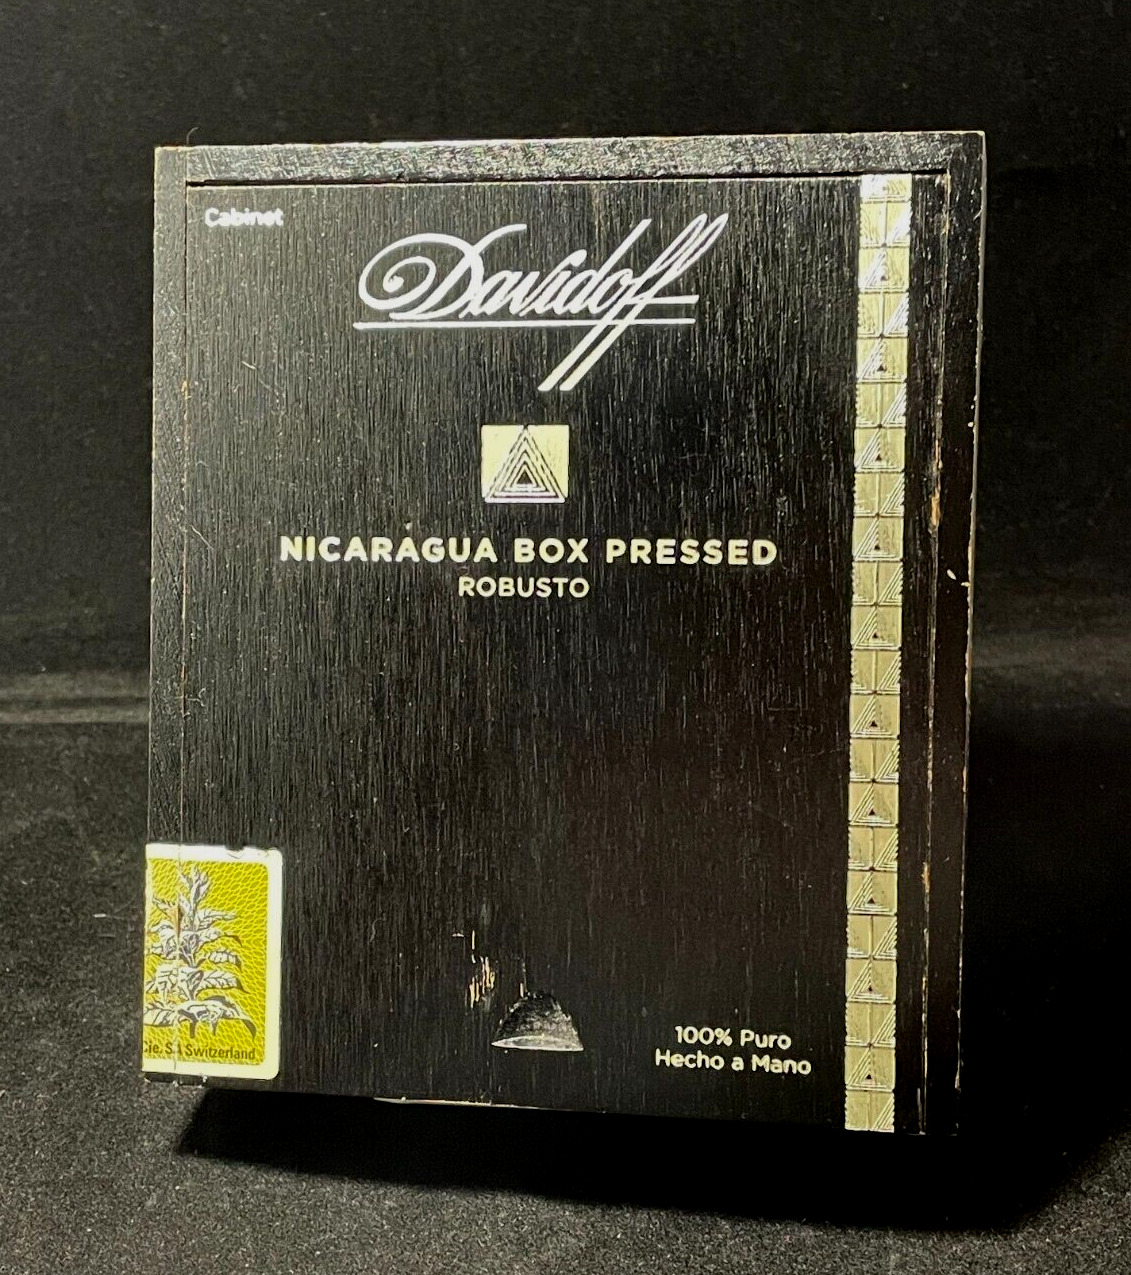 Davidoff (Empty) Nicaragua Box Pressed Robusto Black Wood Cigar Box